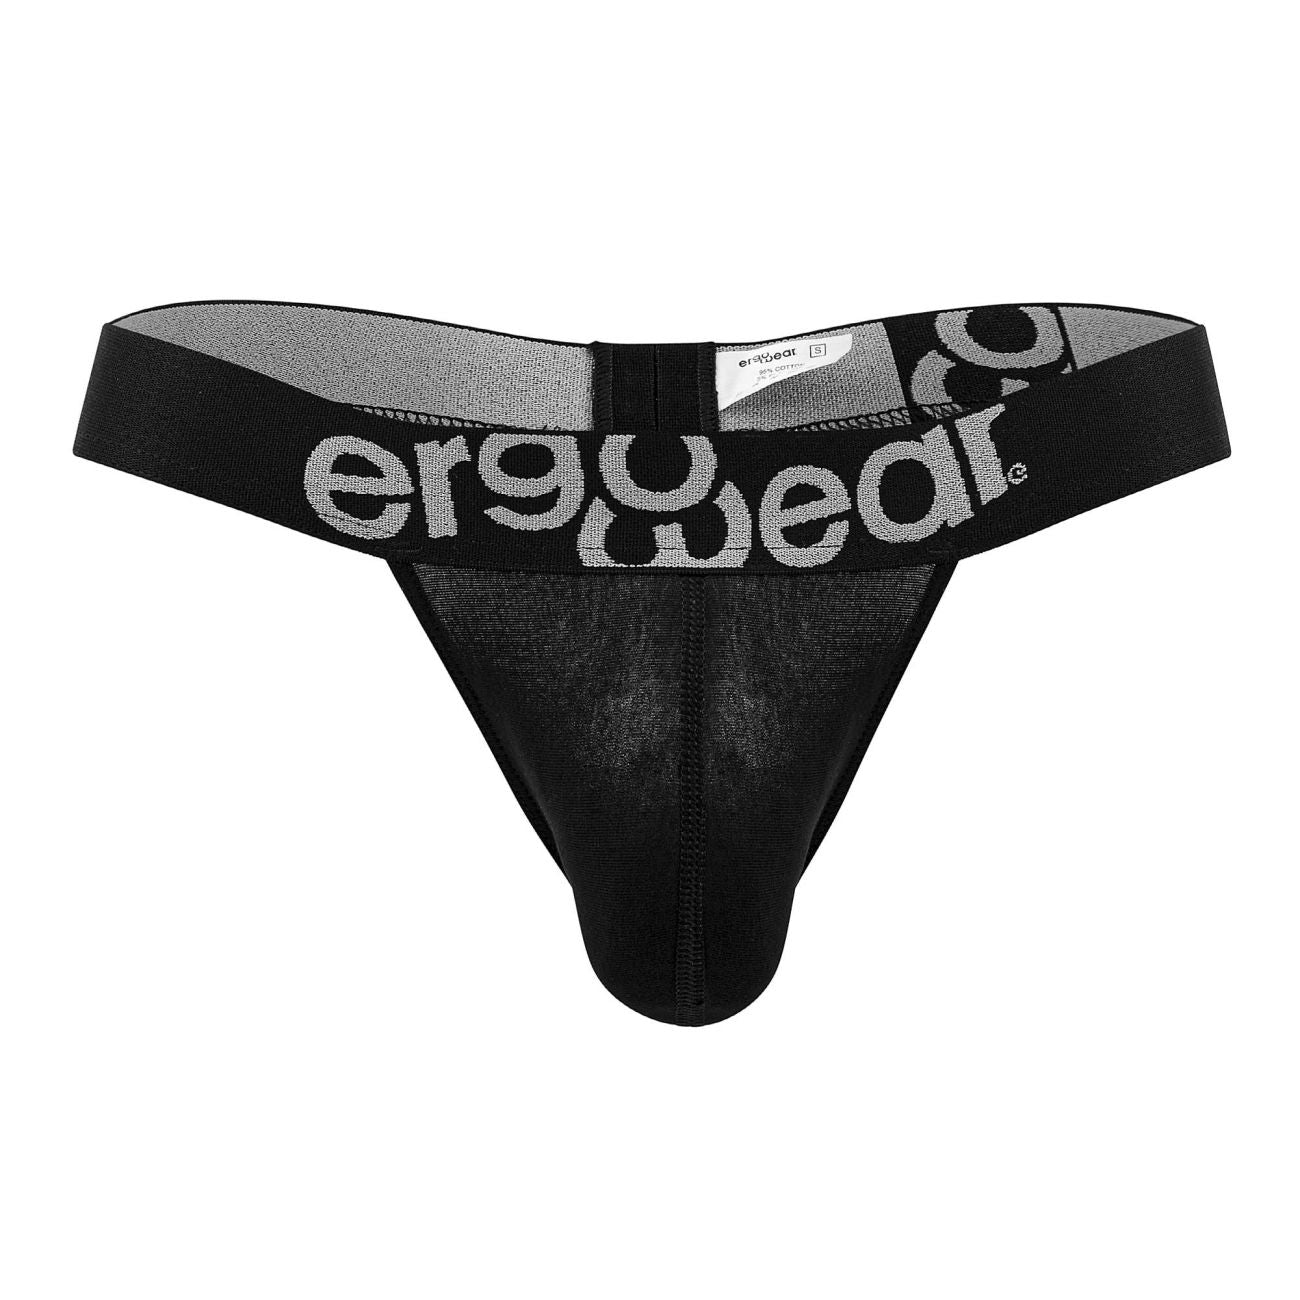 ErgoWear EW1482 MAX COTTON Thongs Black